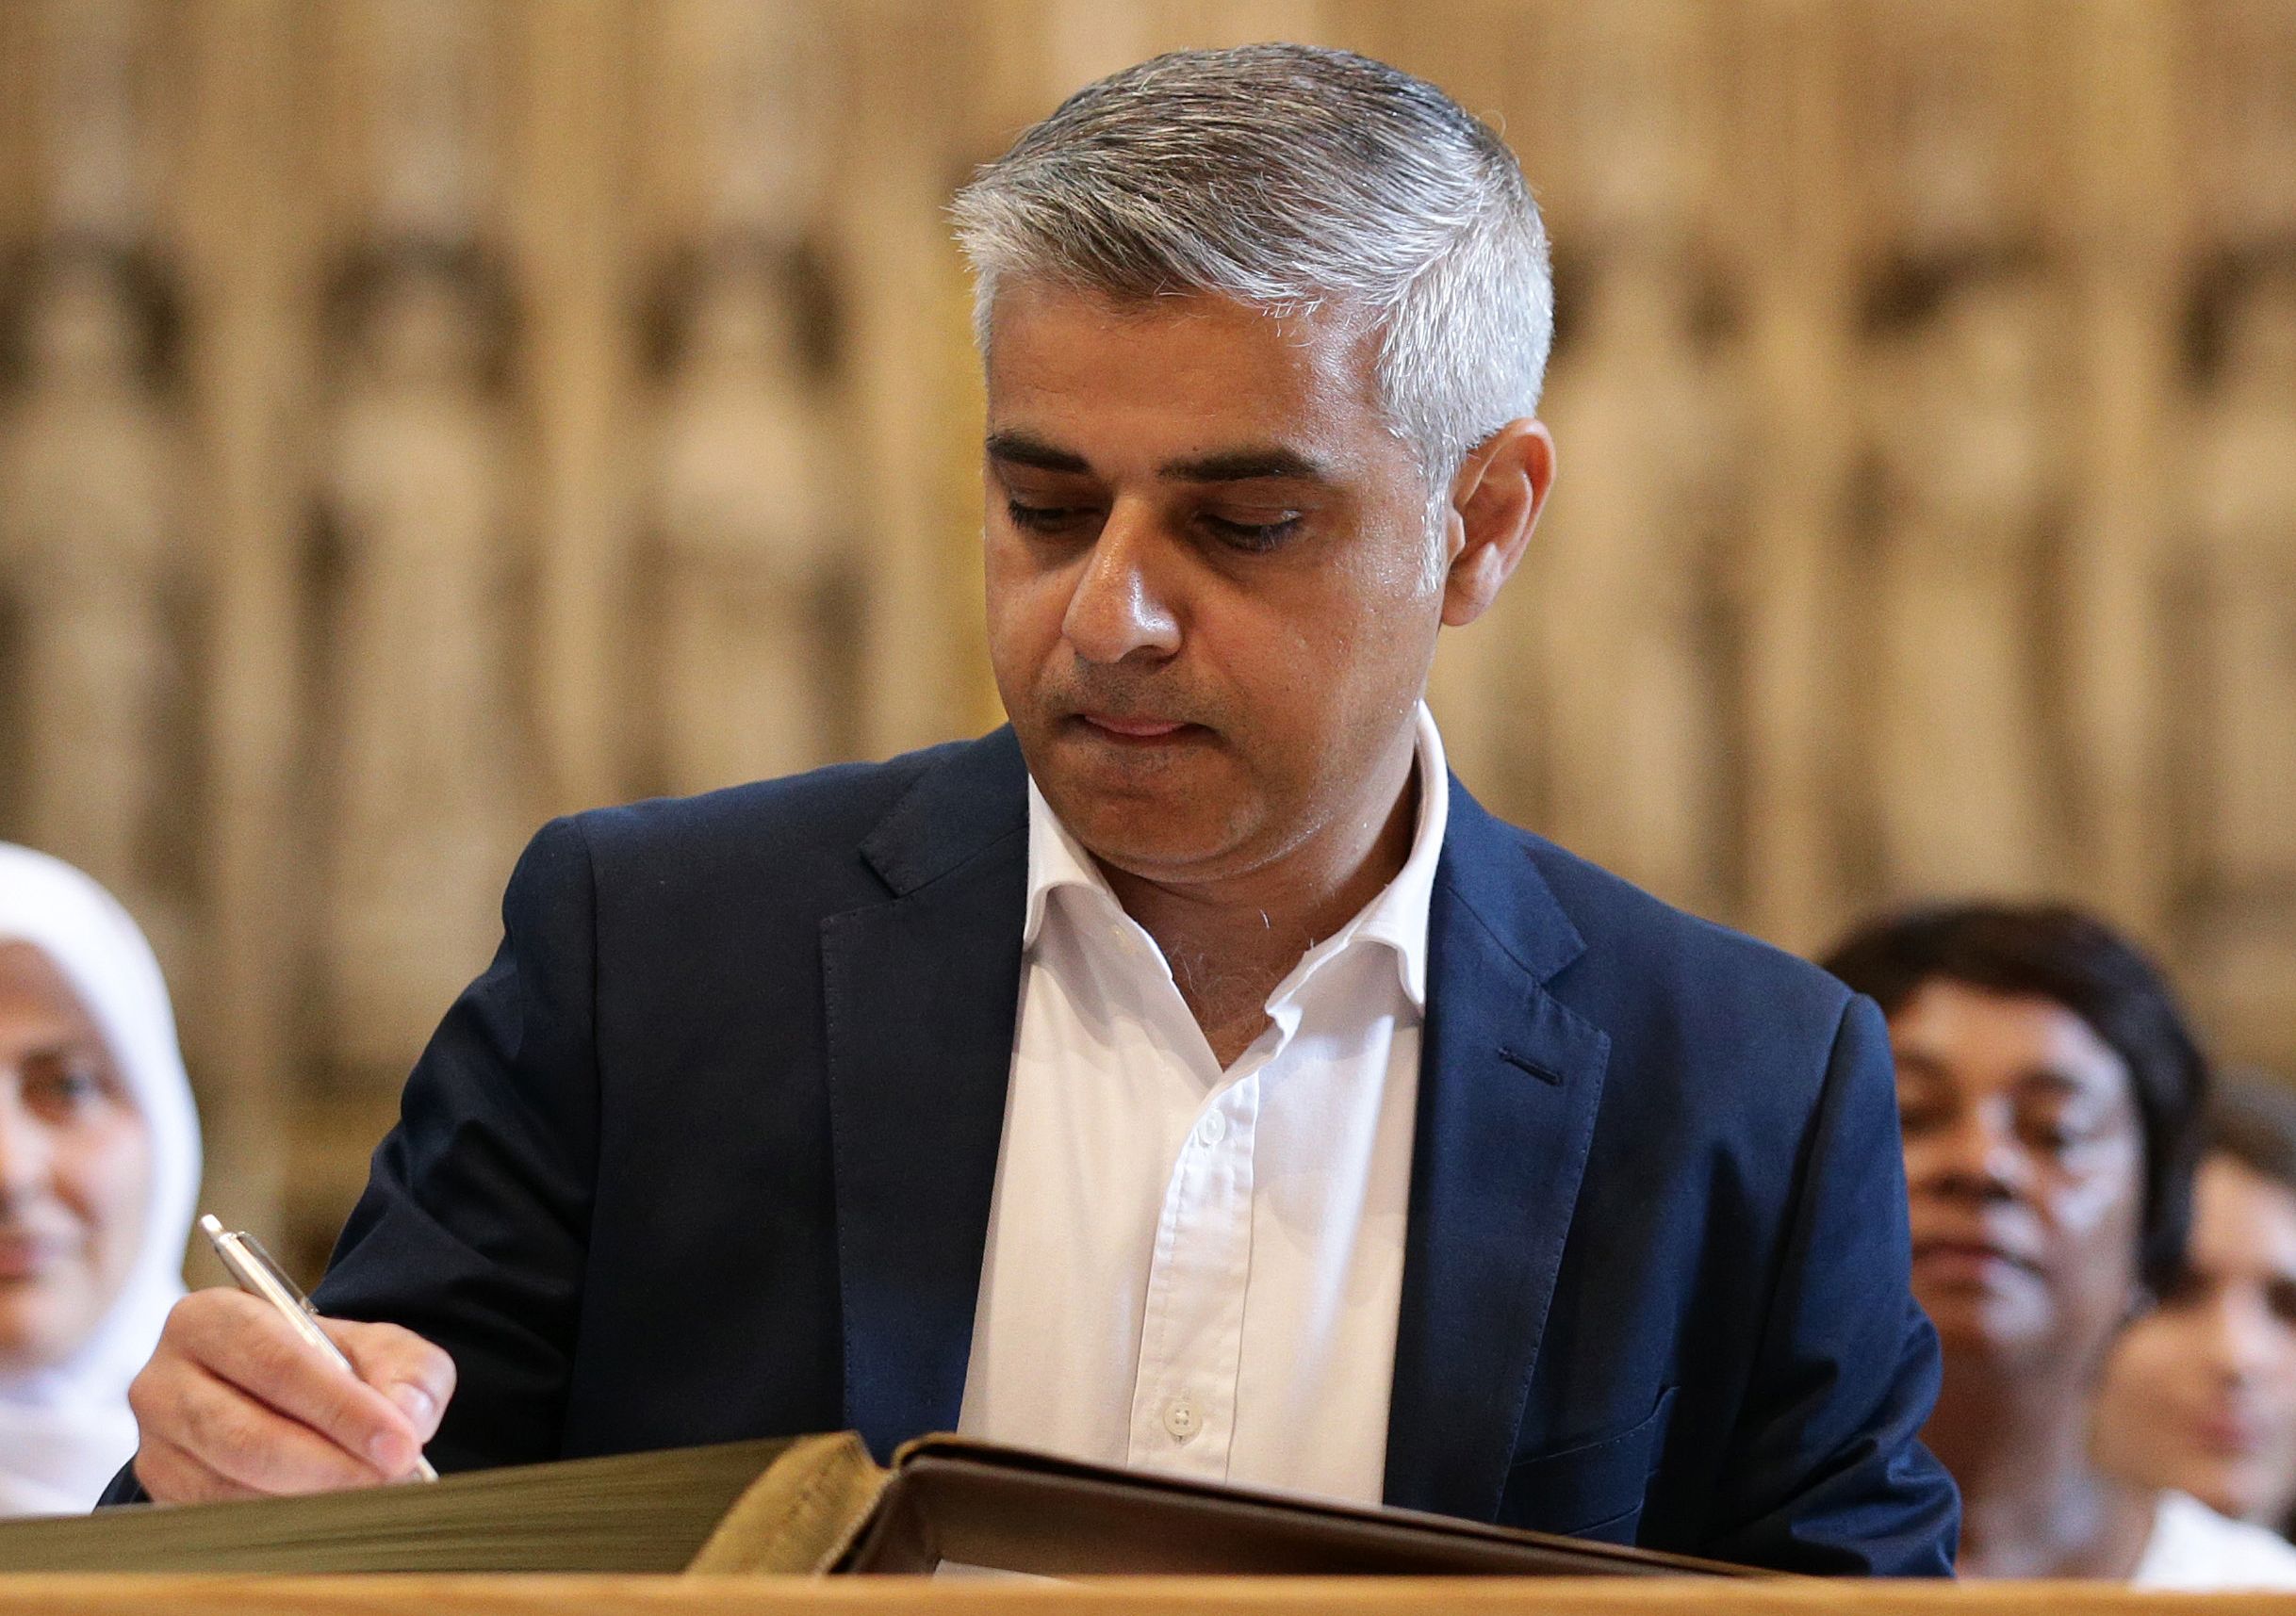 Housing is job Number 1 for London's new mayor Sadiq Khan